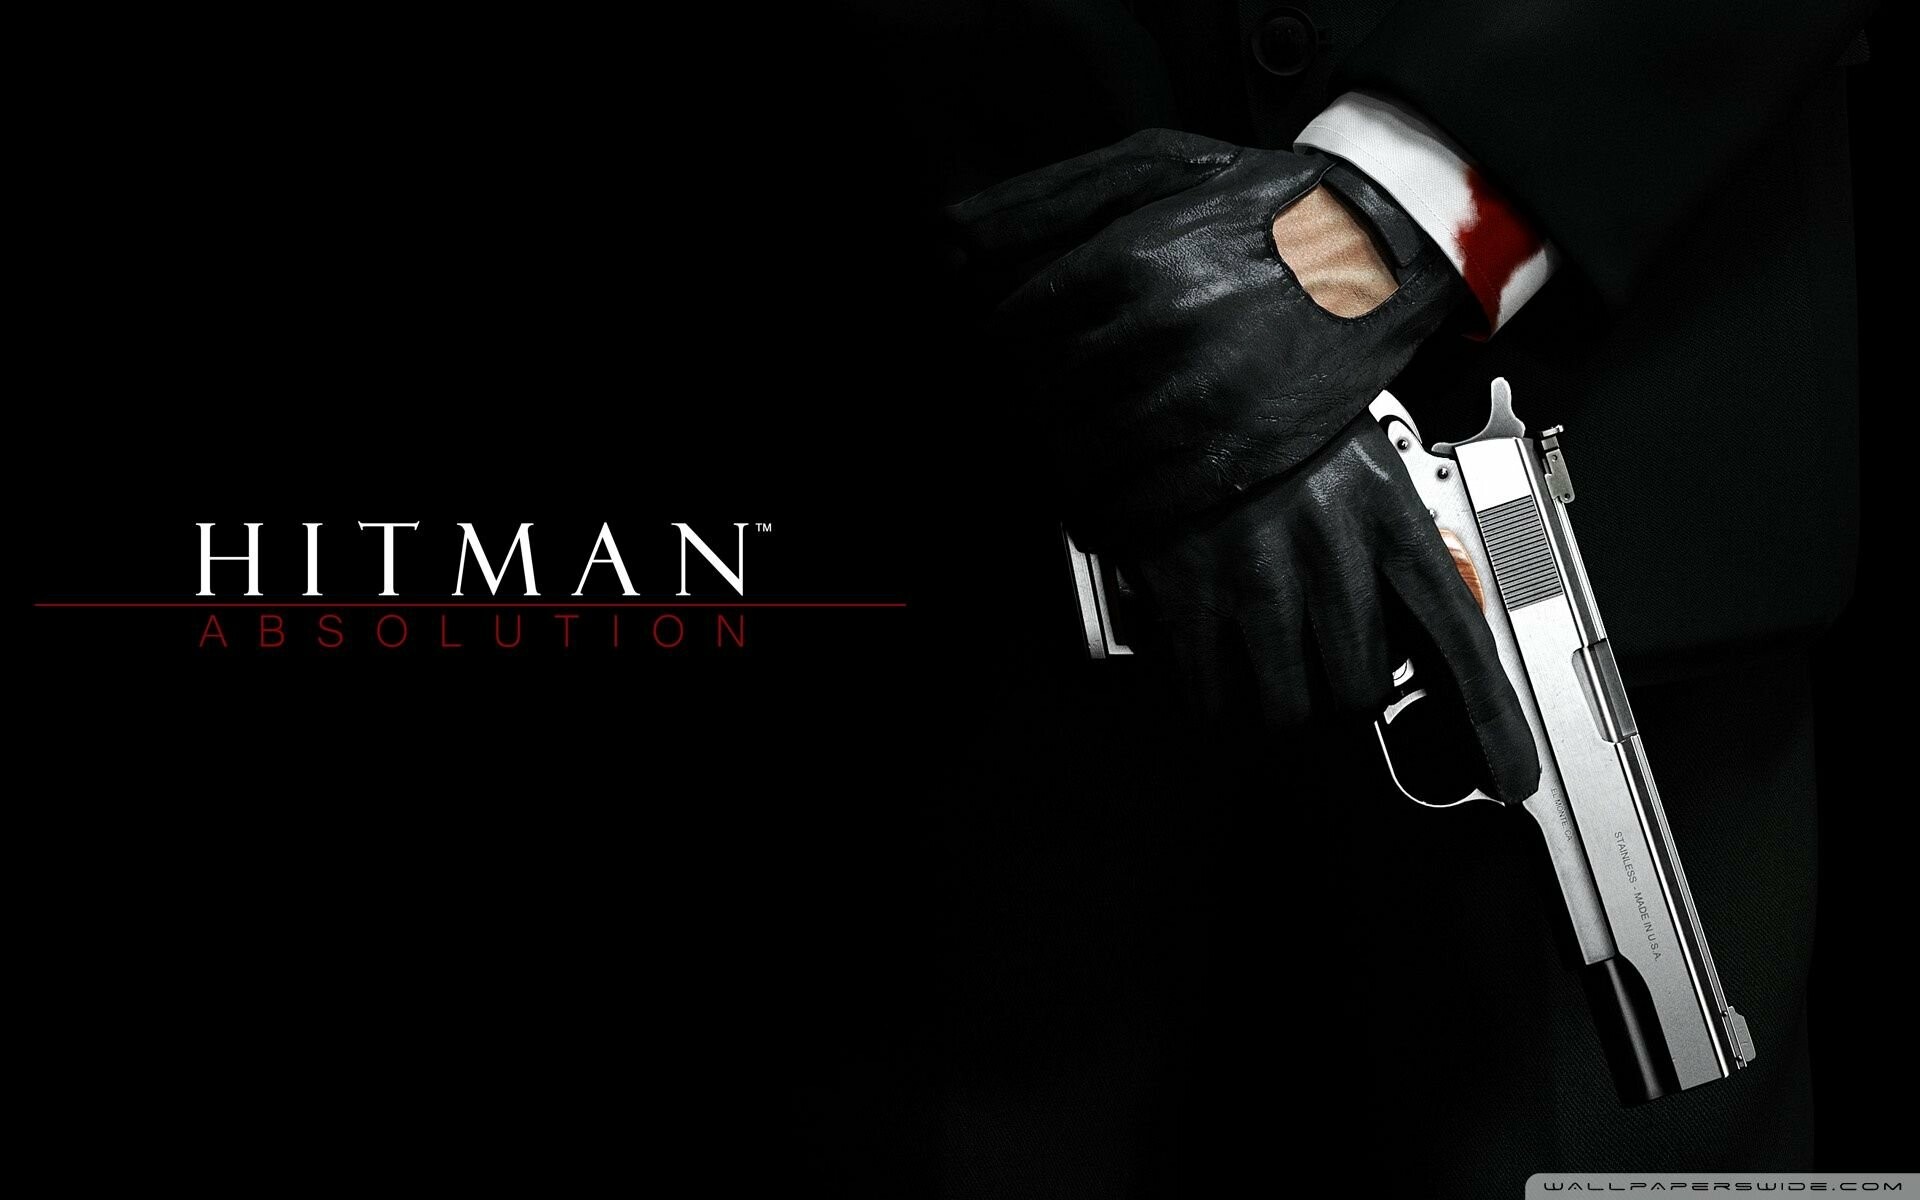 Hitman (Game): The genetically-engineered assassin Agent 47, David Bateson. 1920x1200 HD Wallpaper.